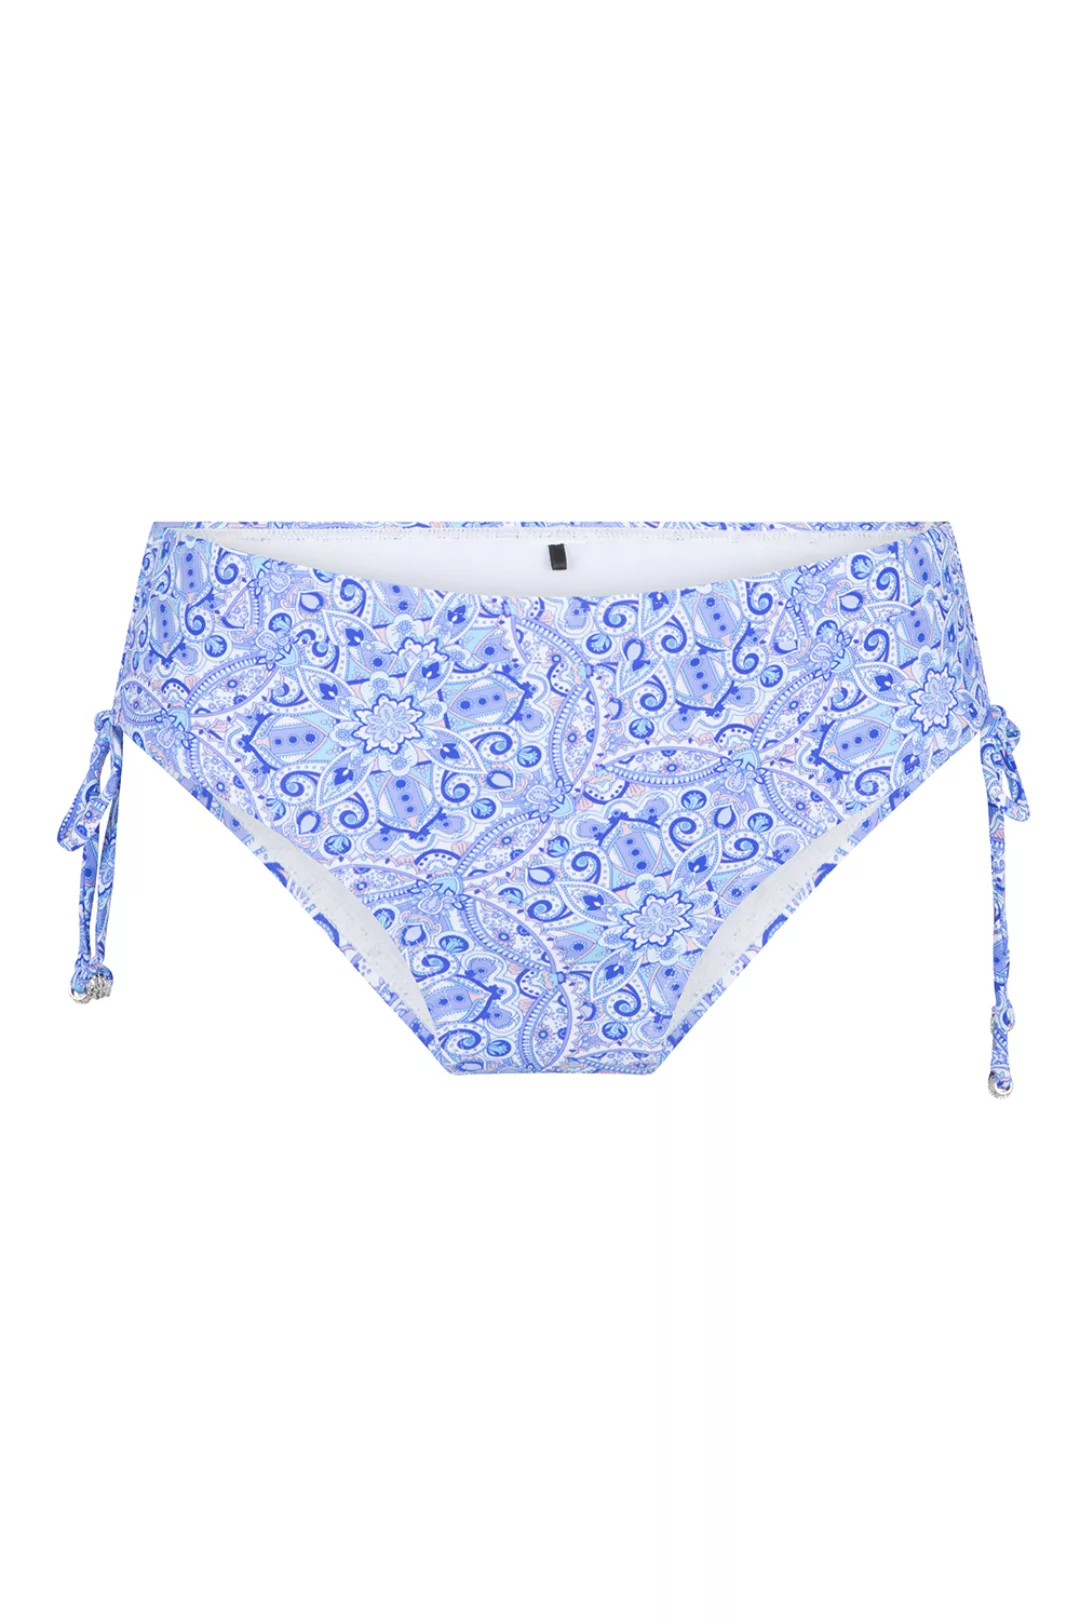 LingaDore Bikini Shorty Blue Paisley 44 blau günstig online kaufen